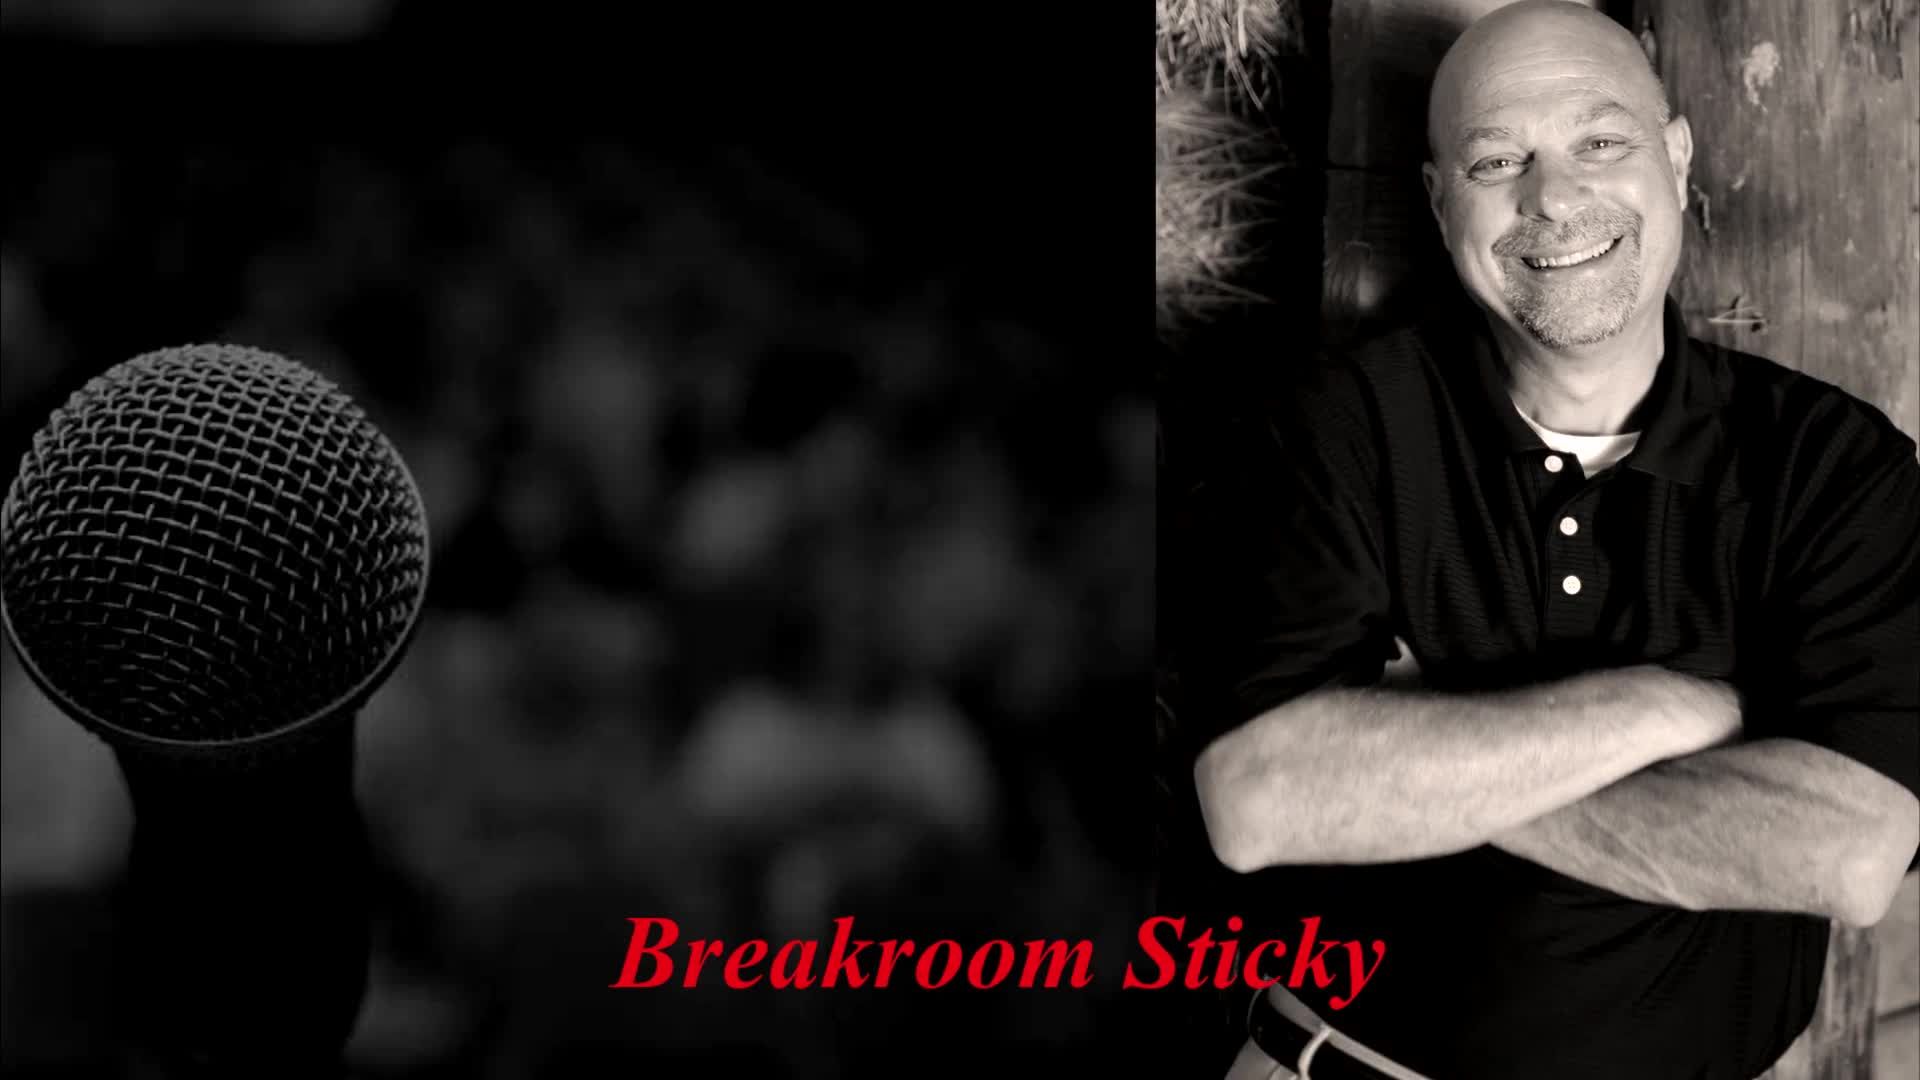 Break room sticky